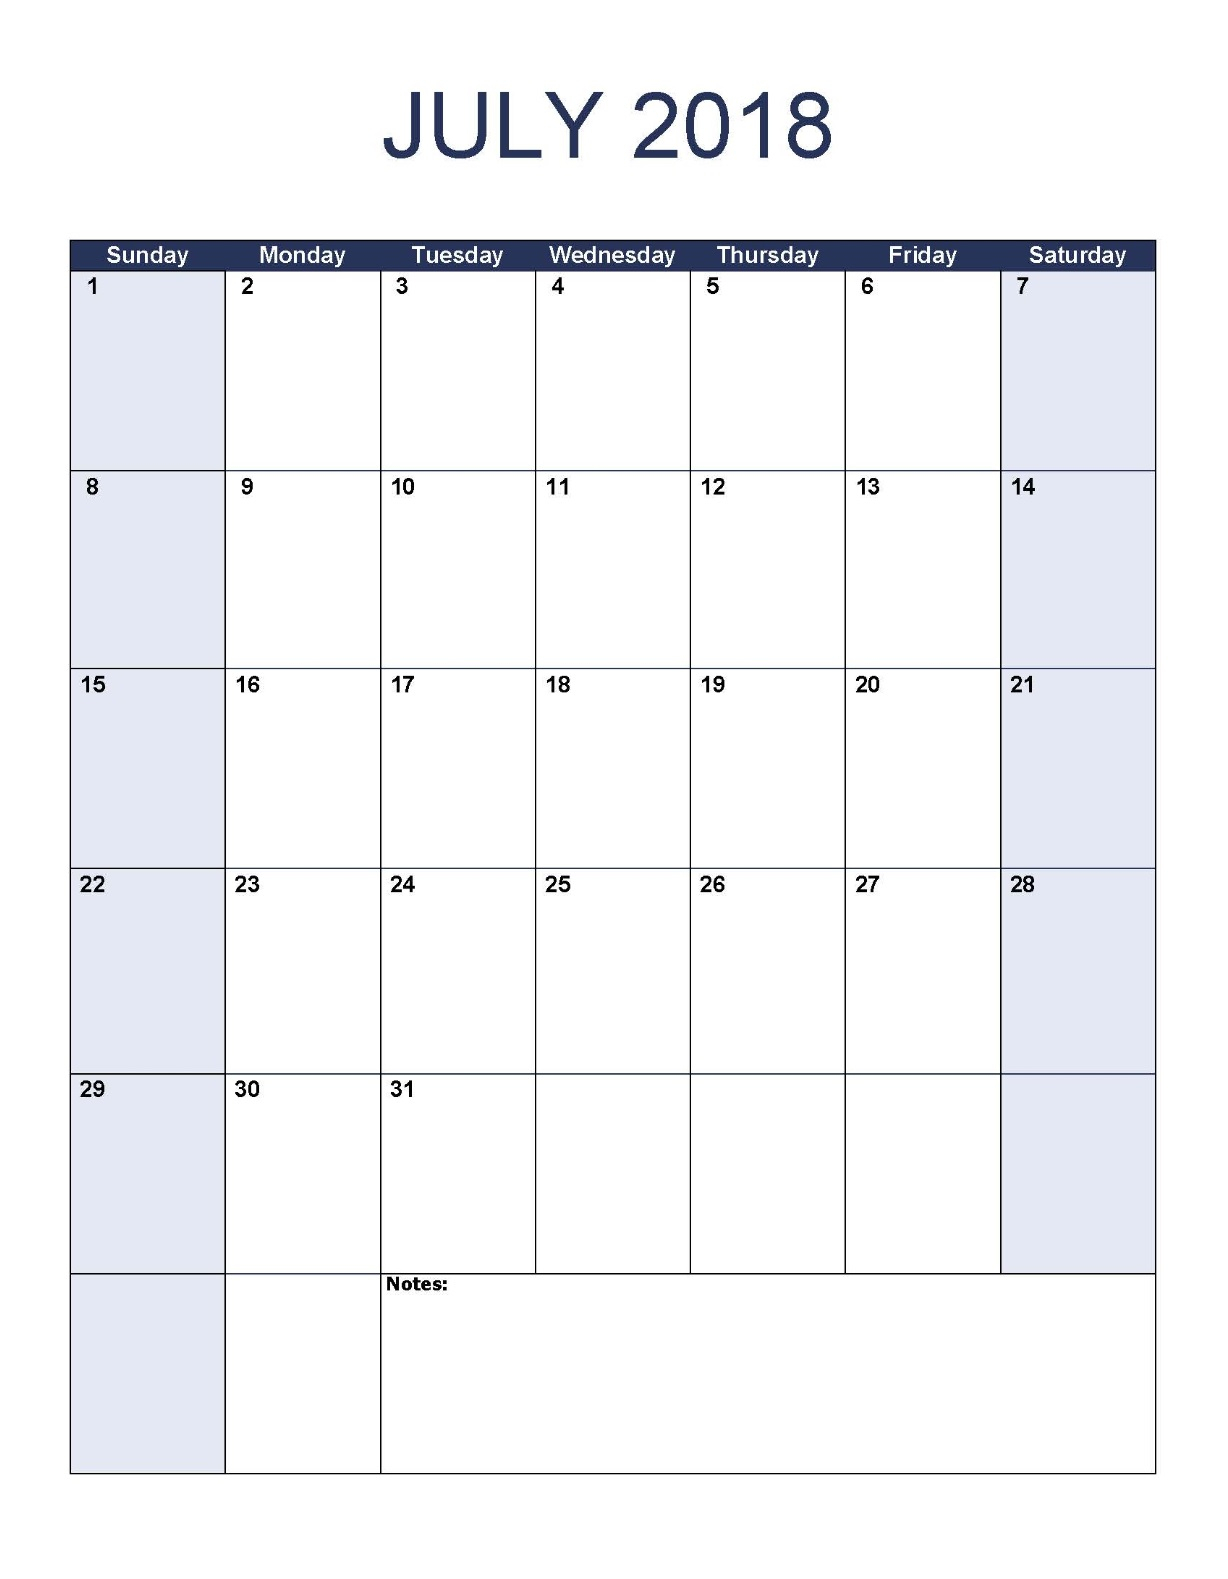 July 2018 Waterproof Calendar | Max Calendars within January 2020 Waterproof Calendar